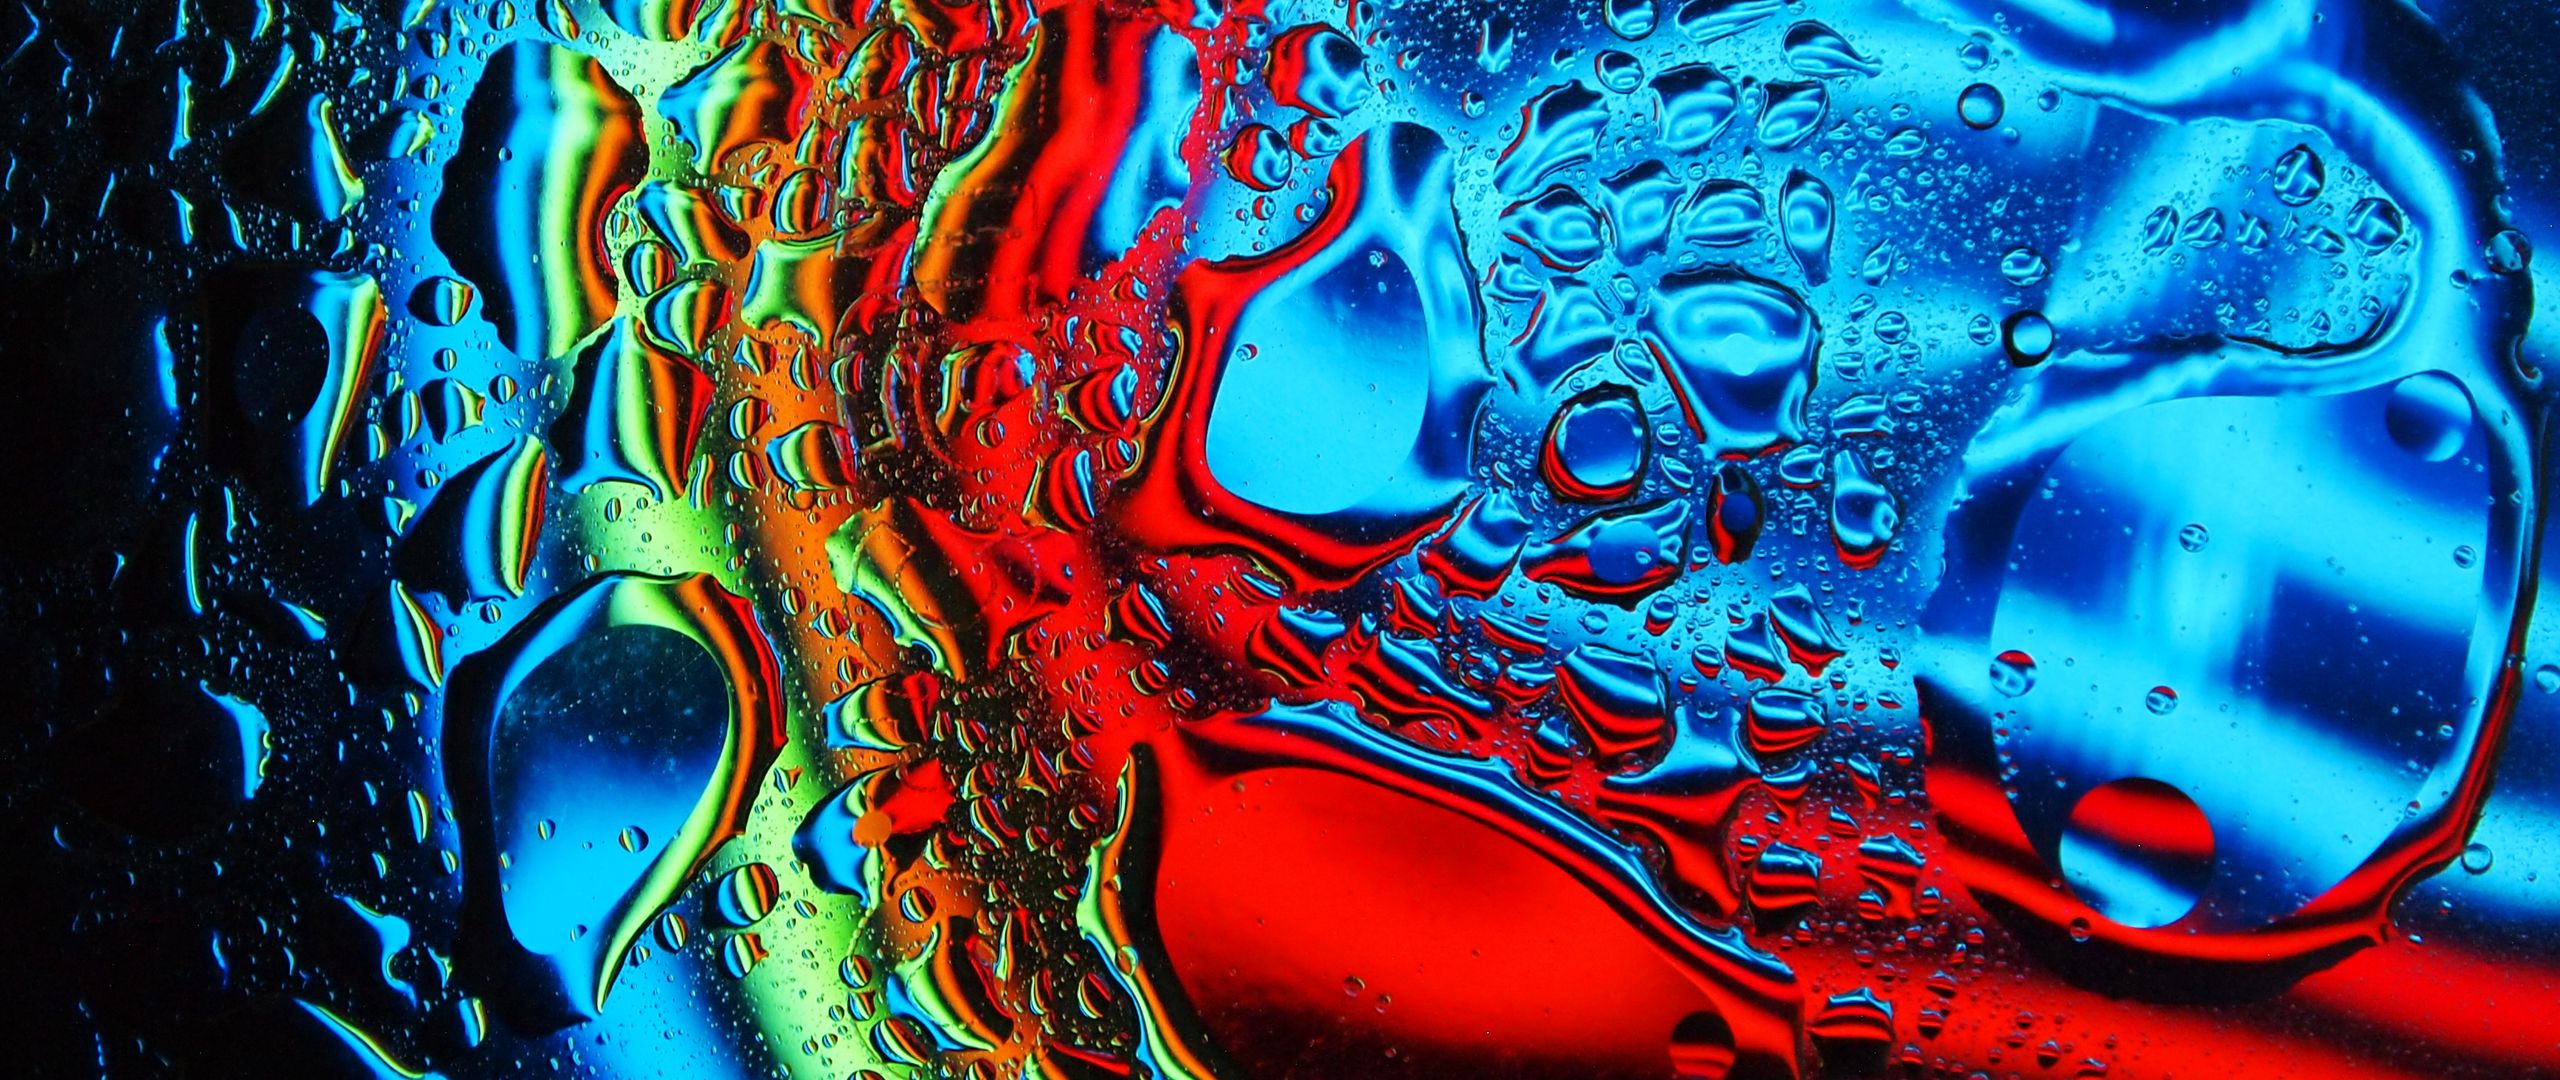 Fondos de pantalla Gotas de agua de colores